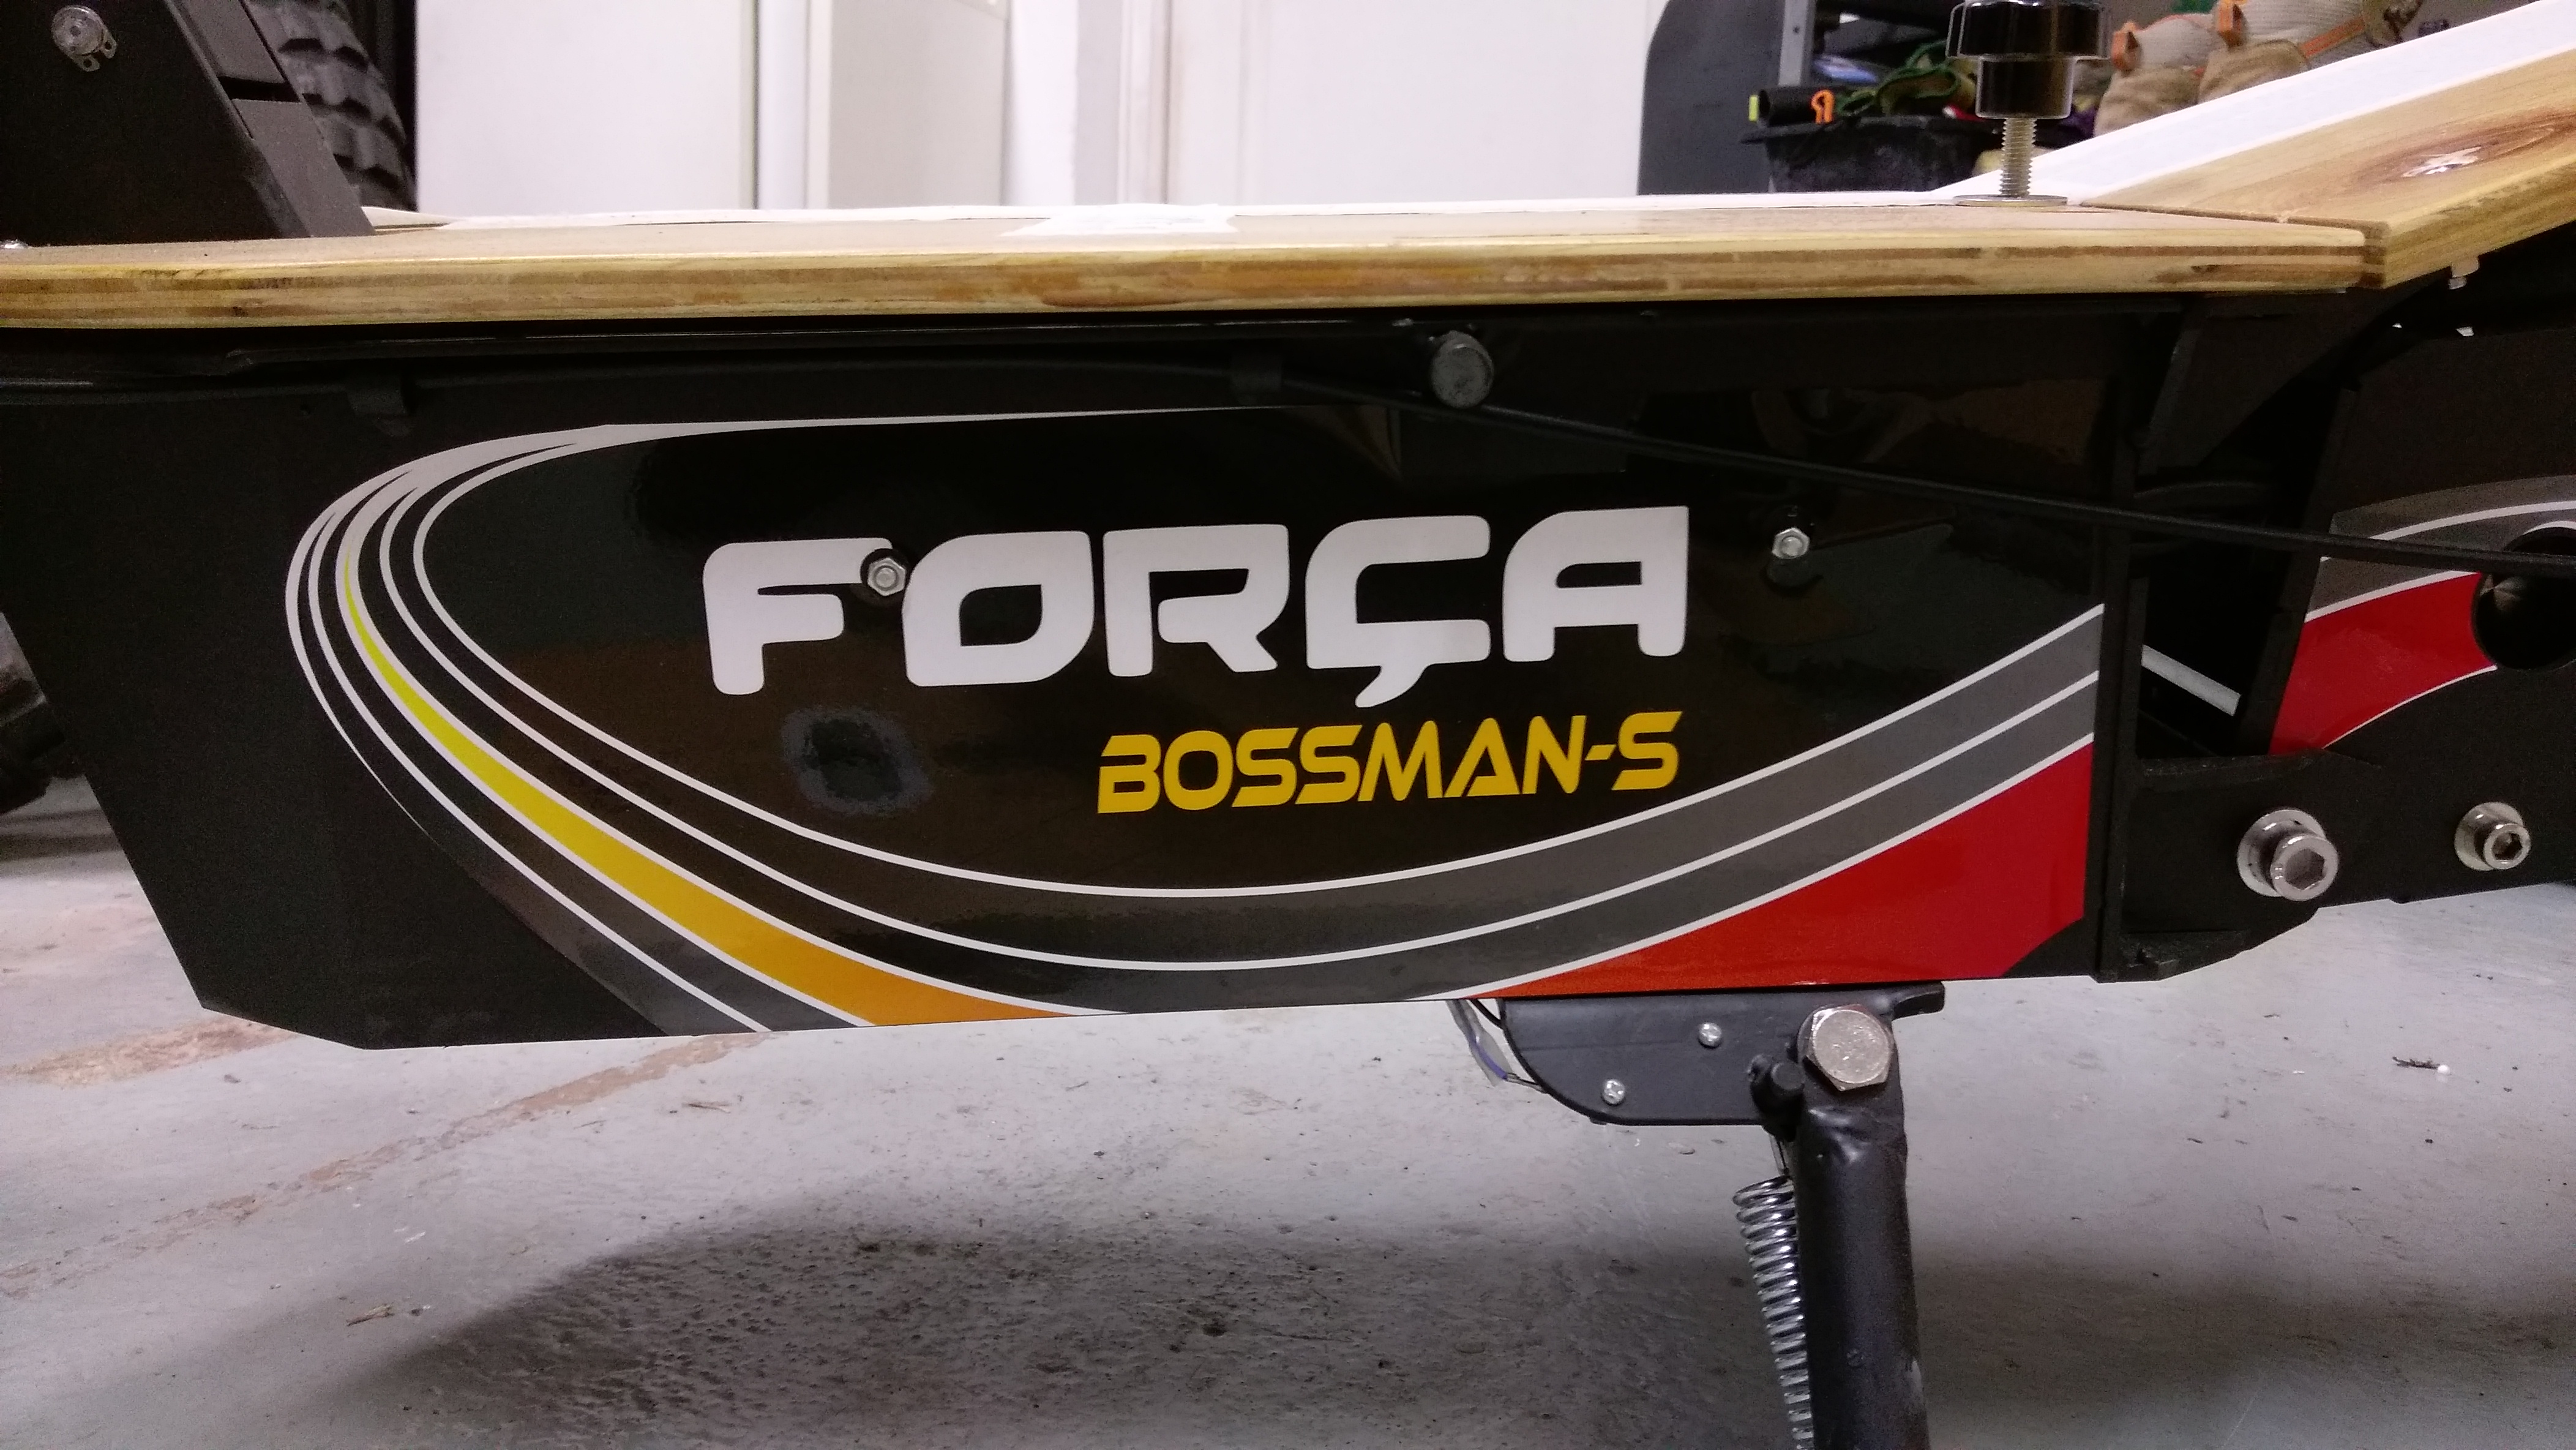 Forca Bossman-S 1500W